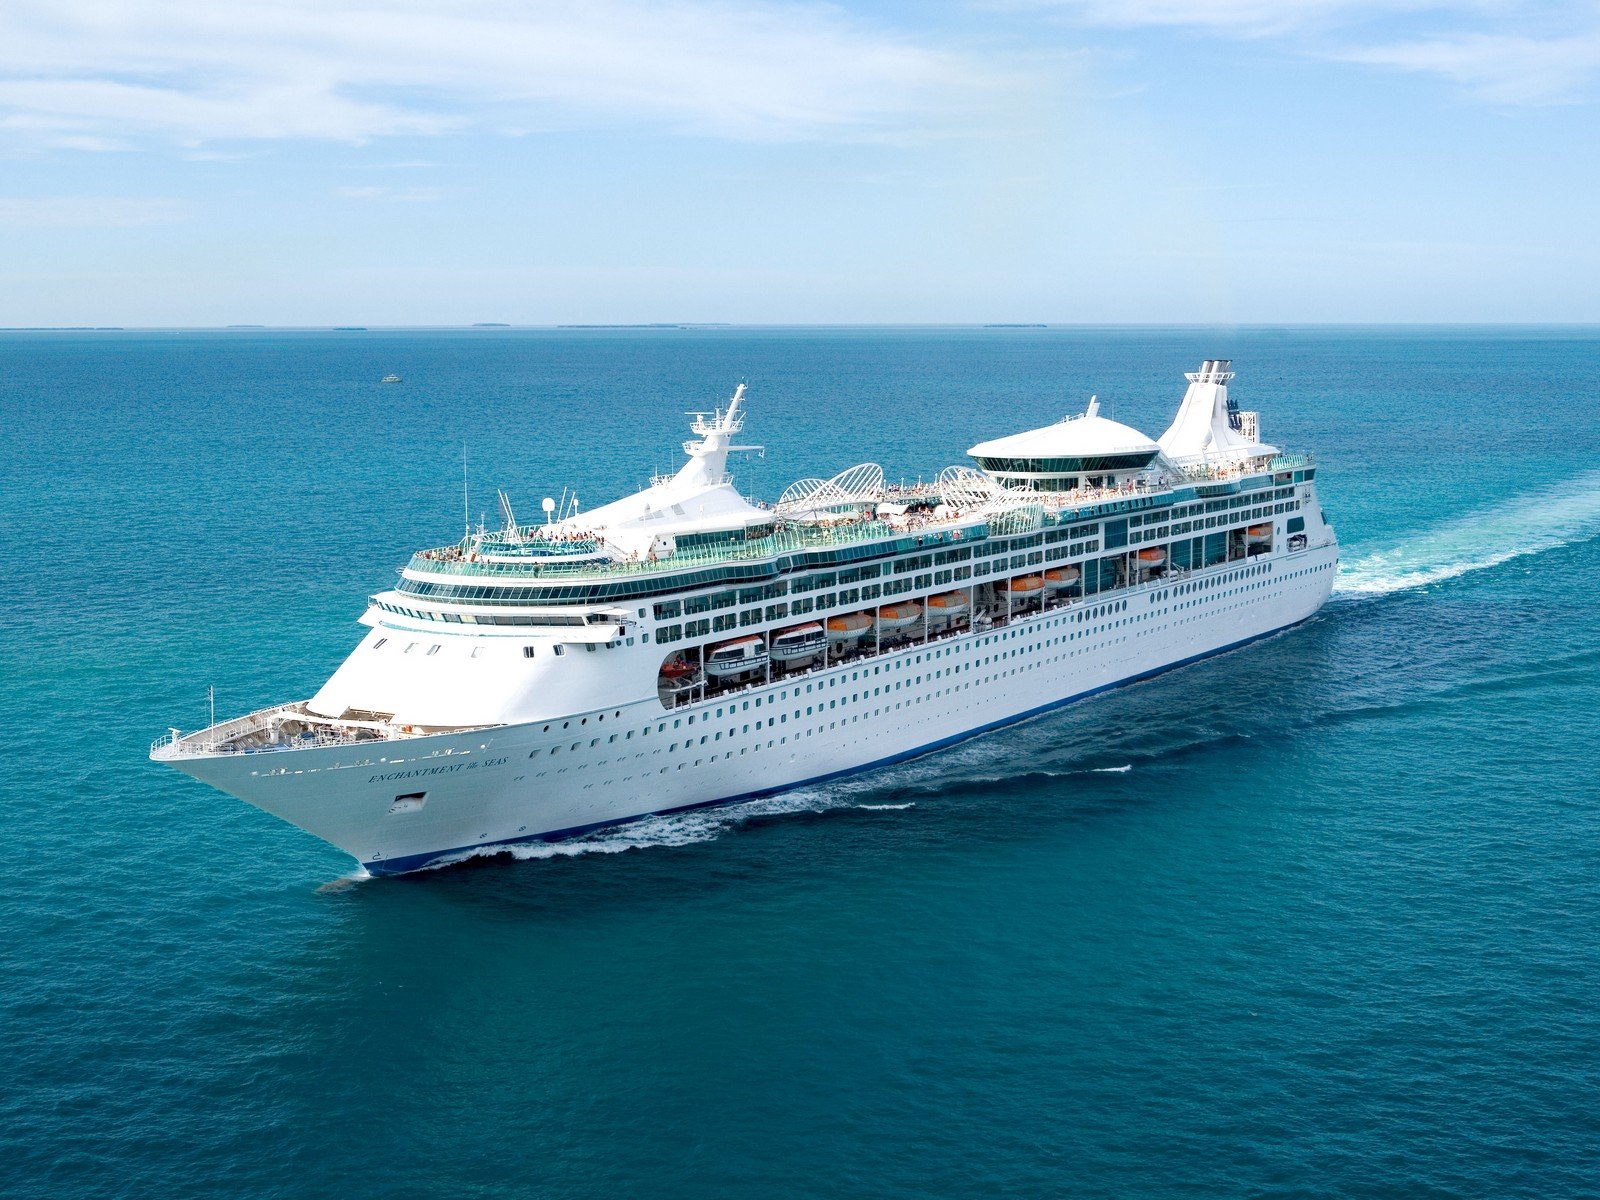 Royal Caribbean releases new Enchantment of the Seas 2022-2023 sailings from Baltimore | Royal Caribbean Blog